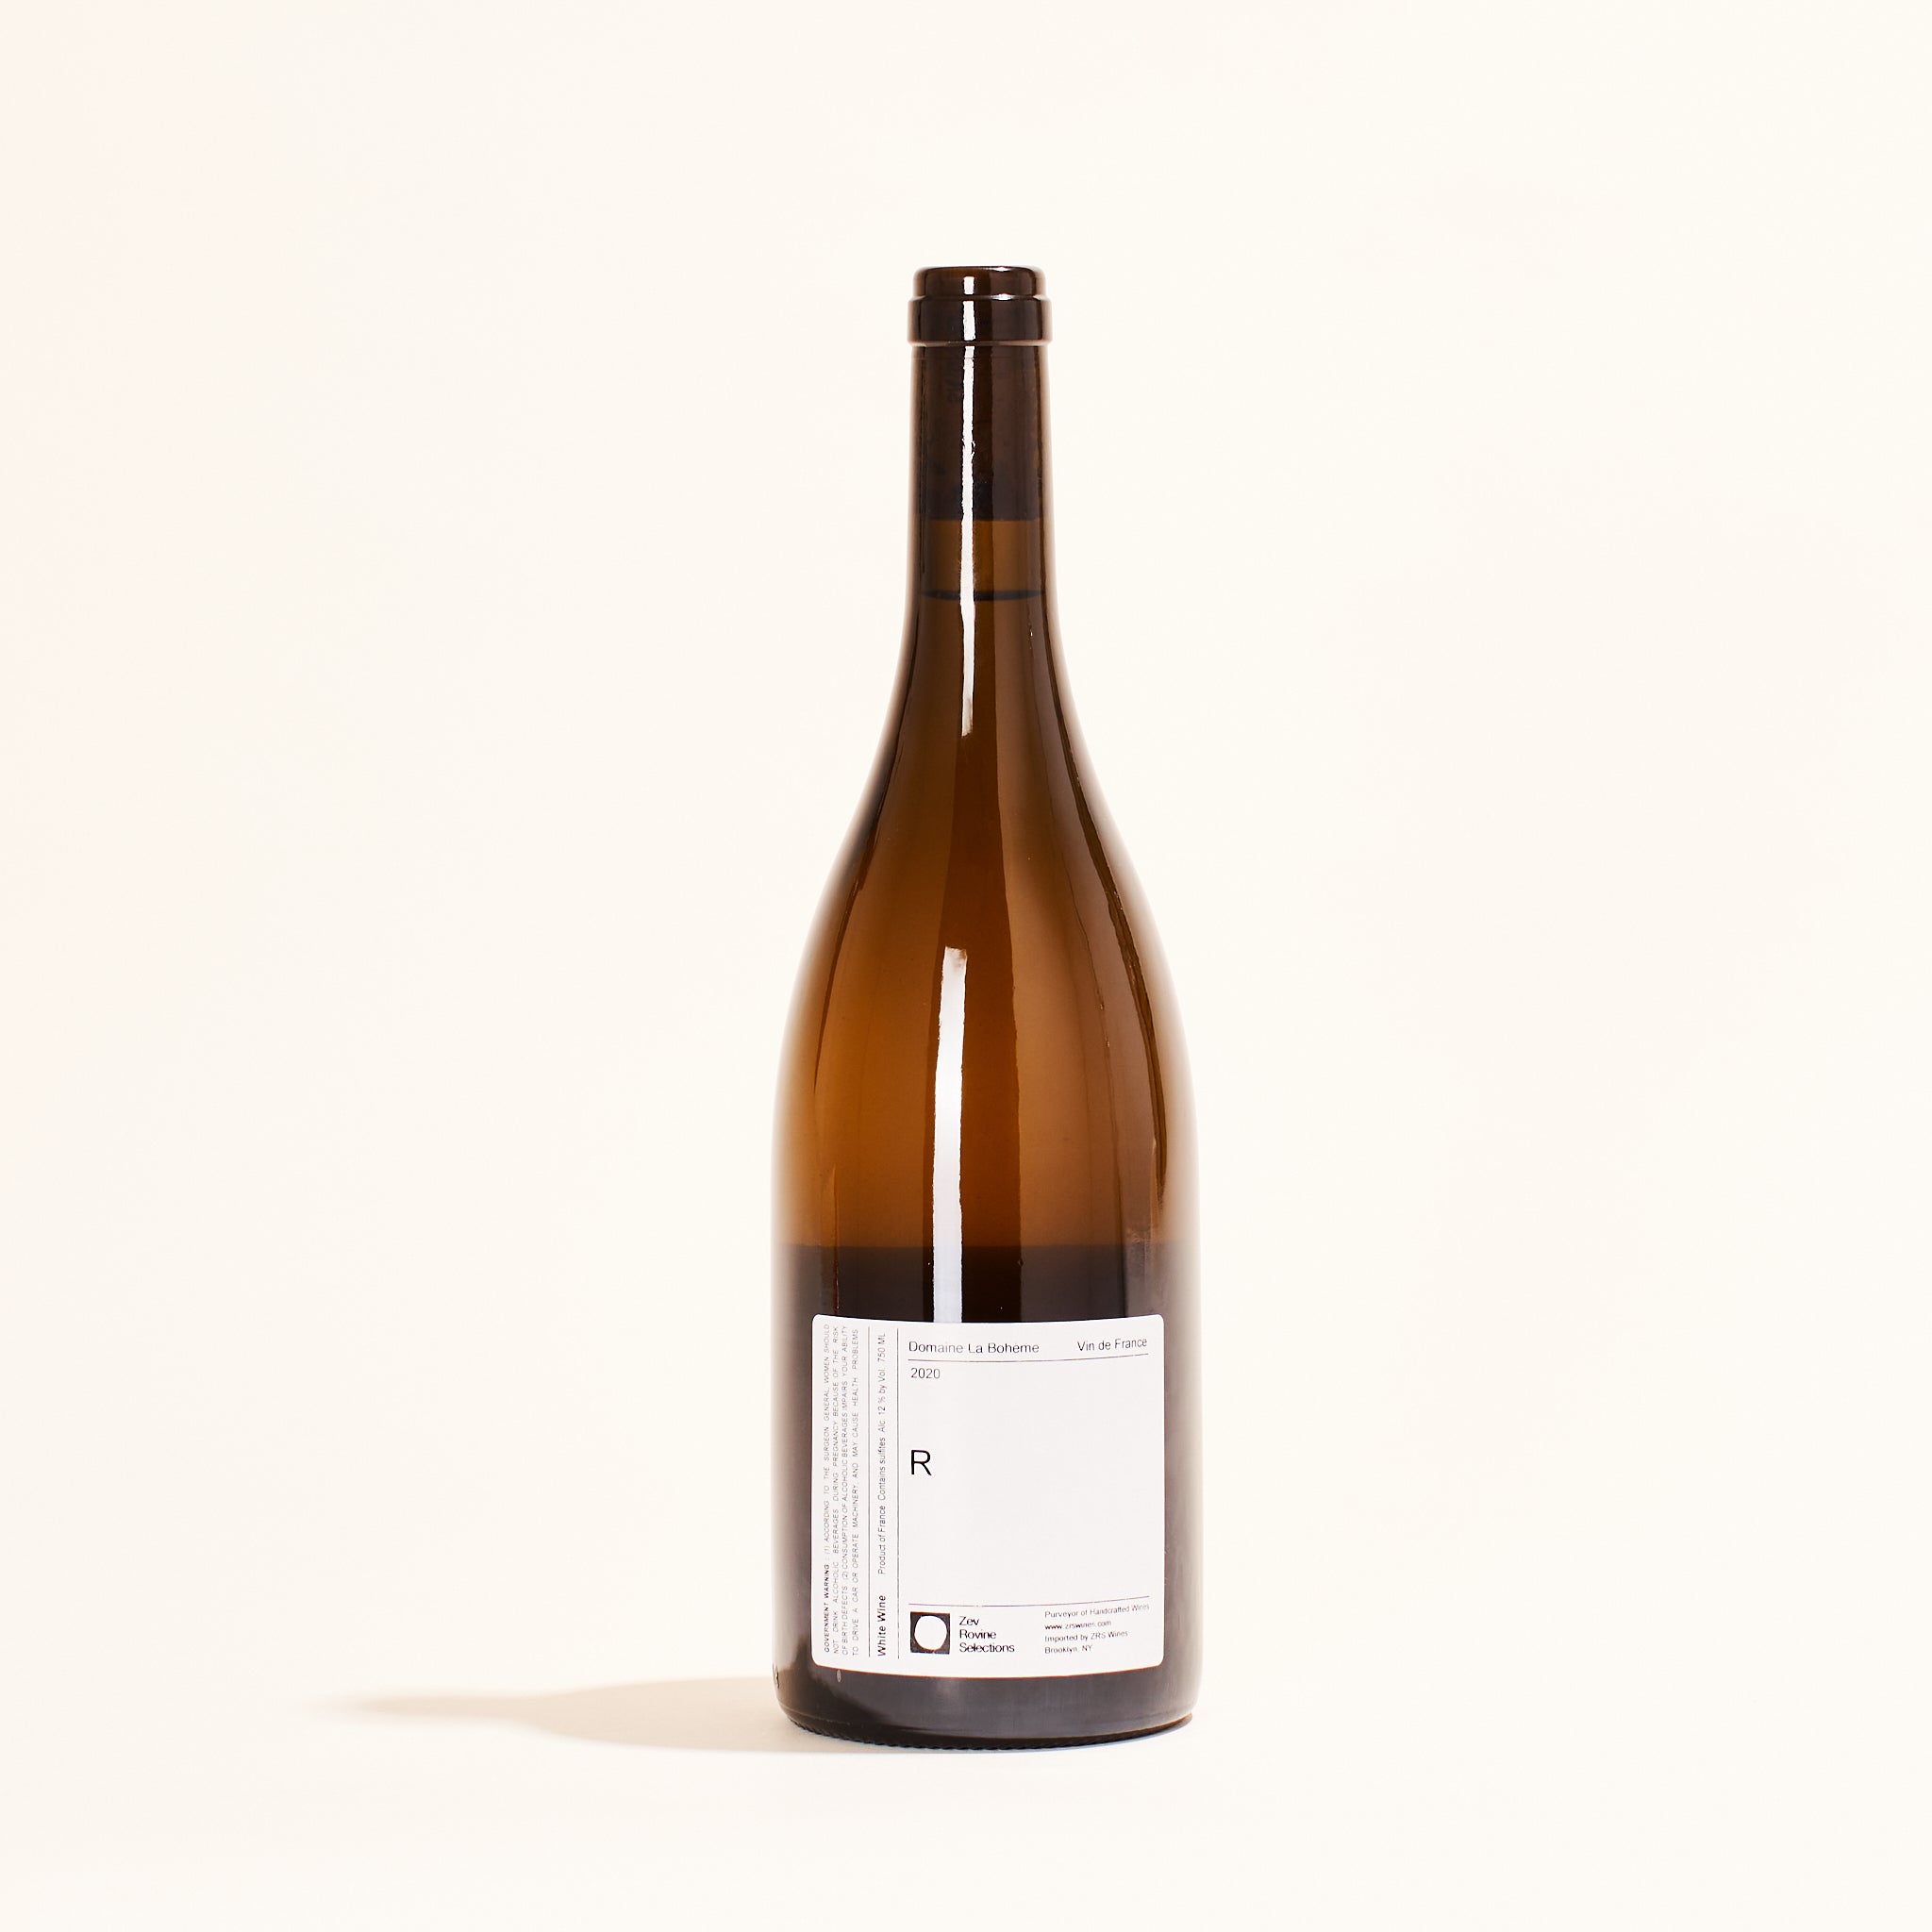 Domaine la Boheme "R" VDF Blanc riesling natural white wine Alsace France back label